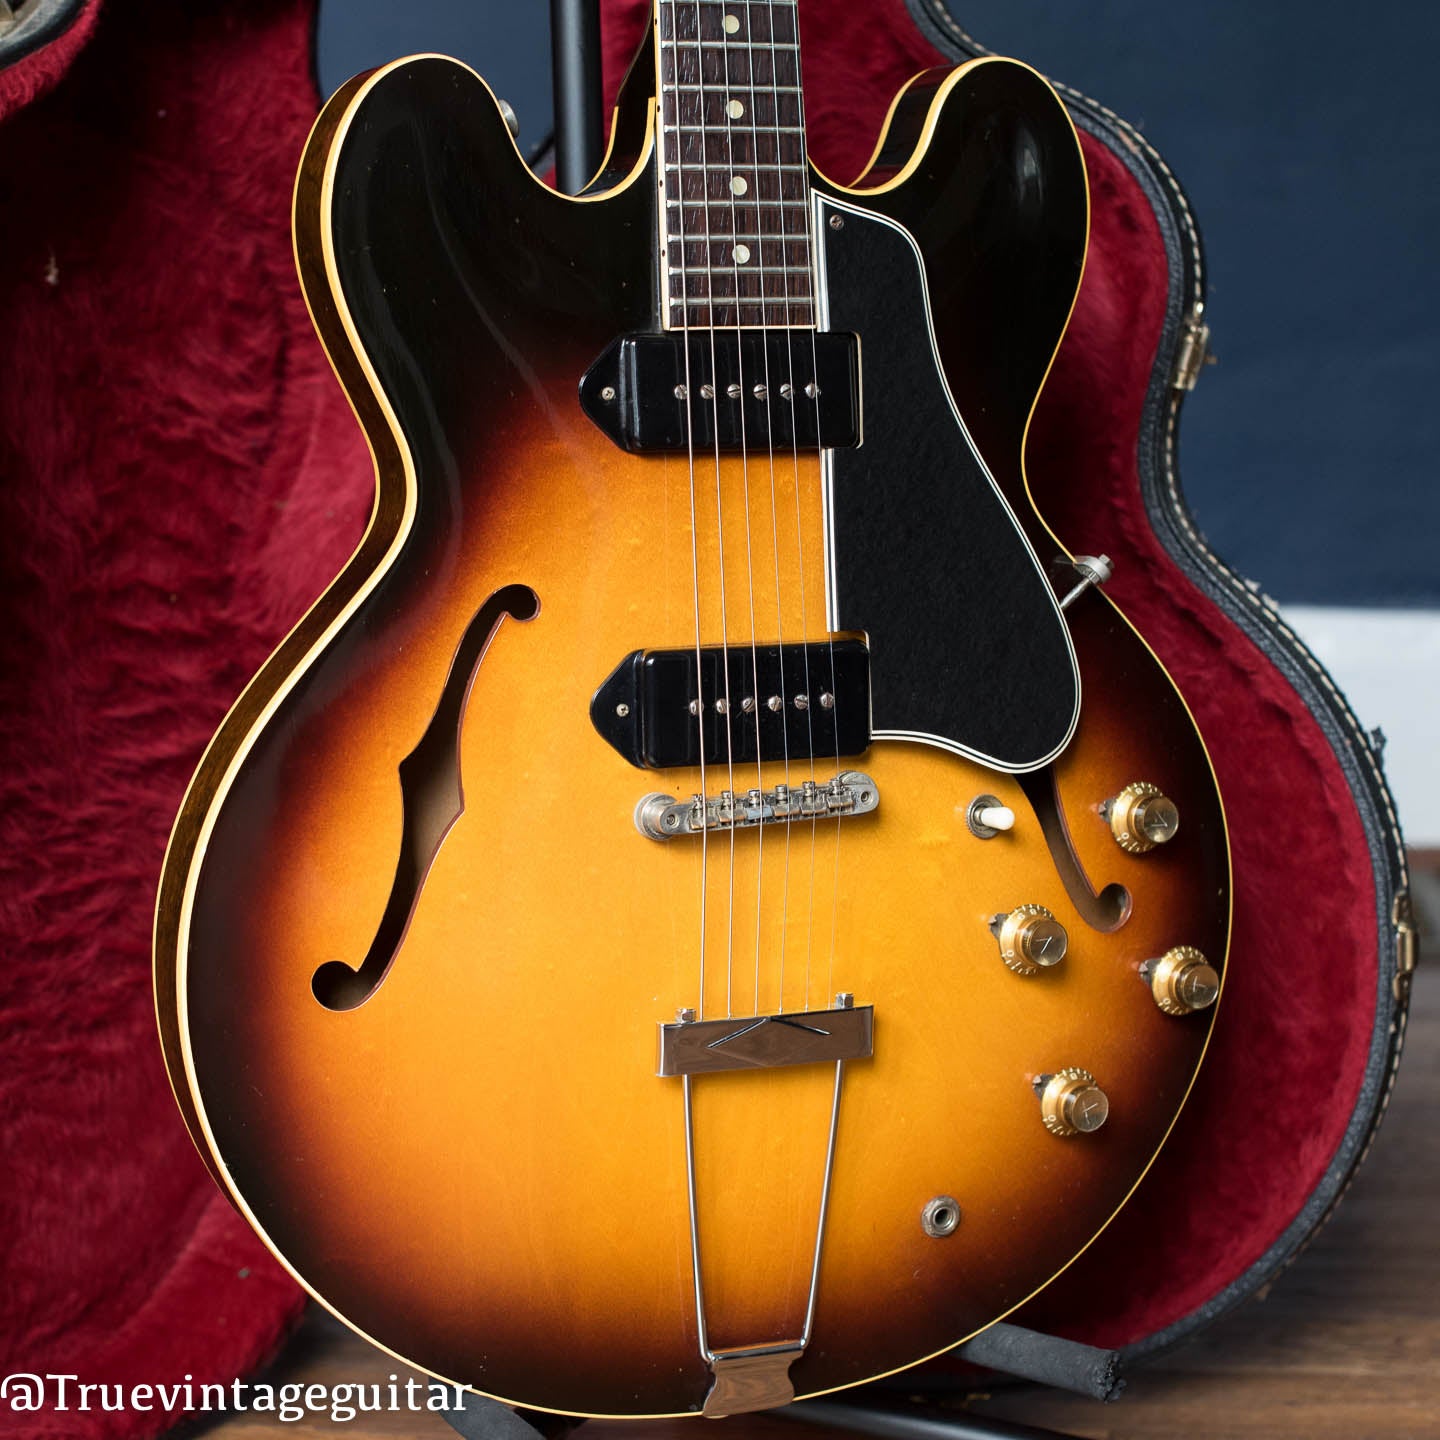 Vintage 1960 Gibson ES-330 electric guitar